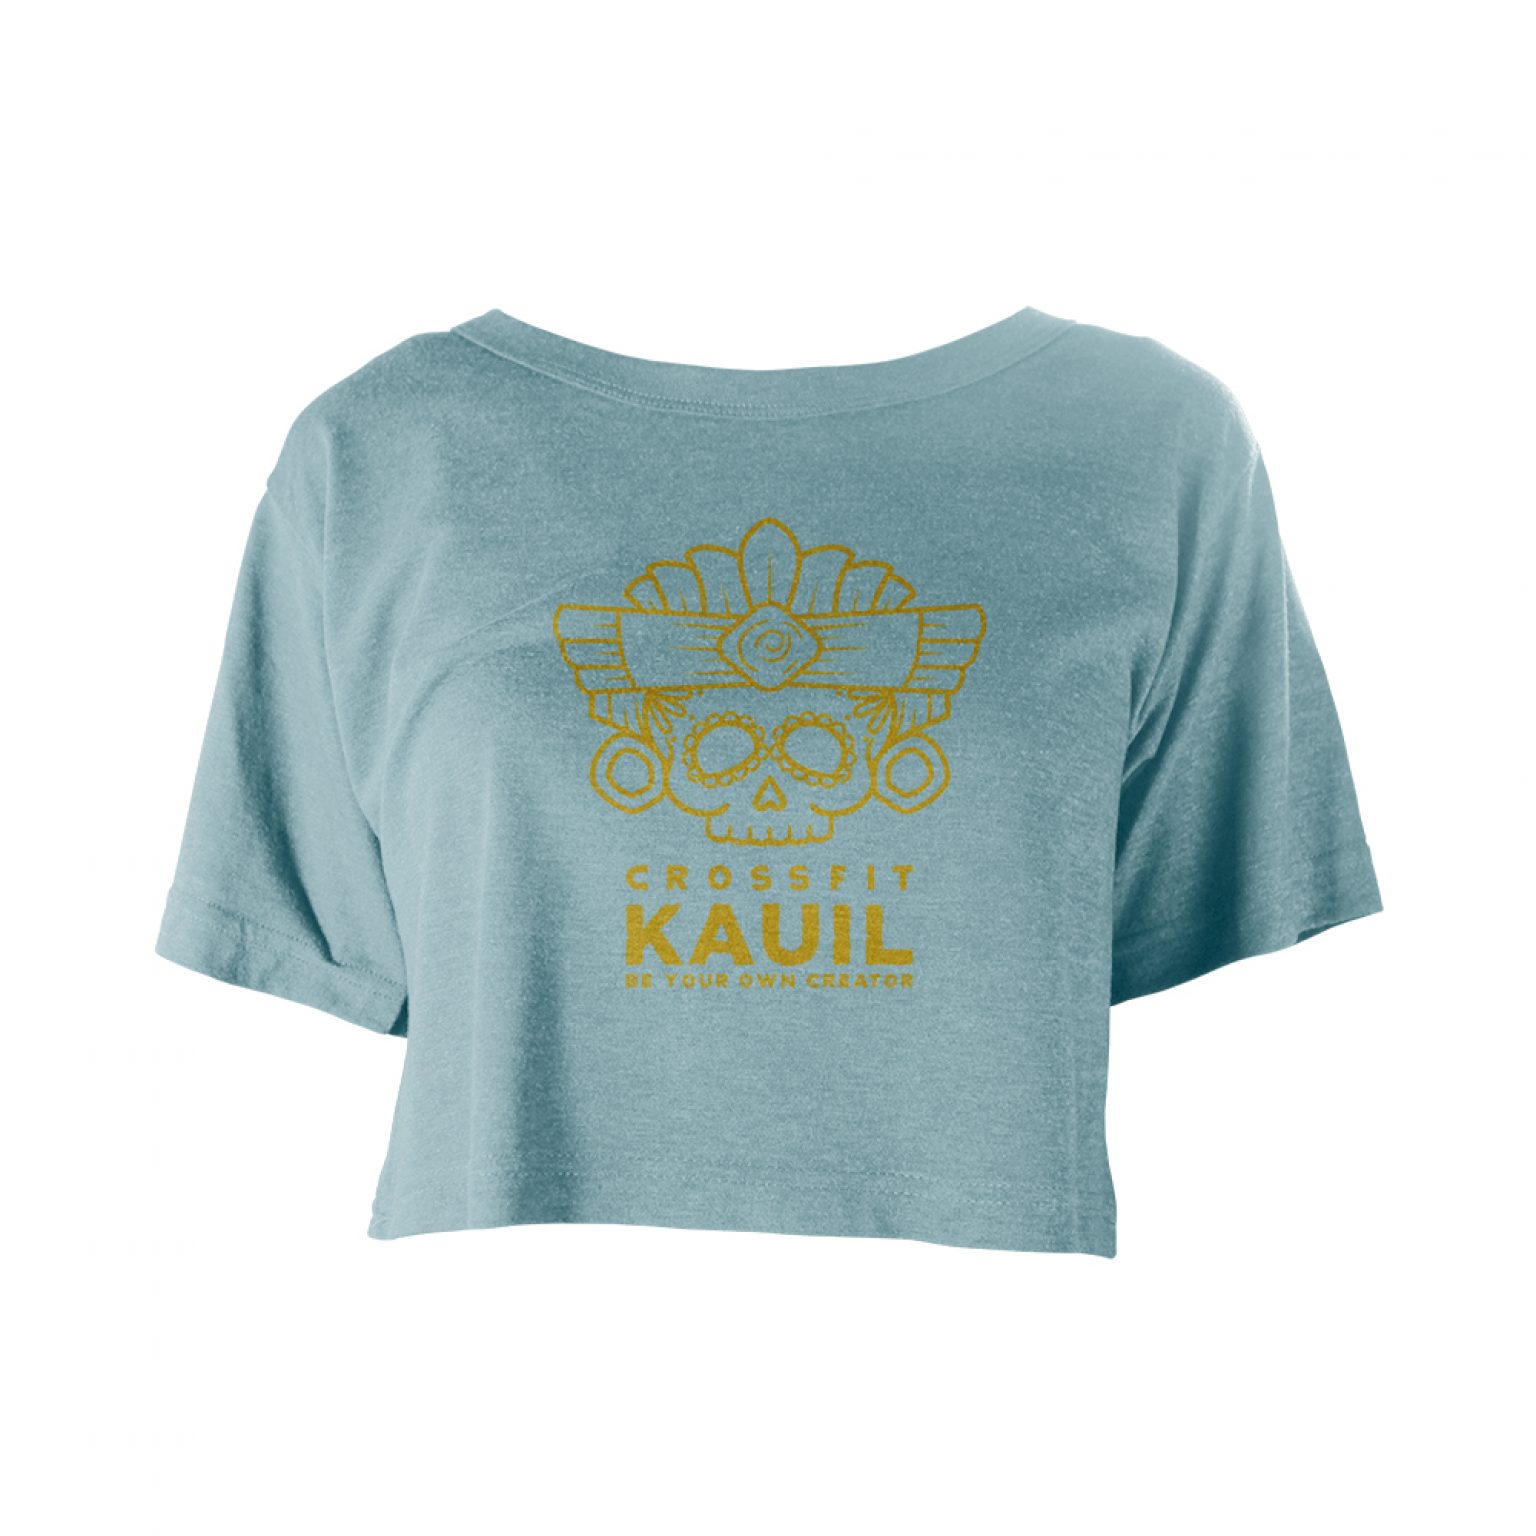 CrossFit Kauil Festival Denim gold